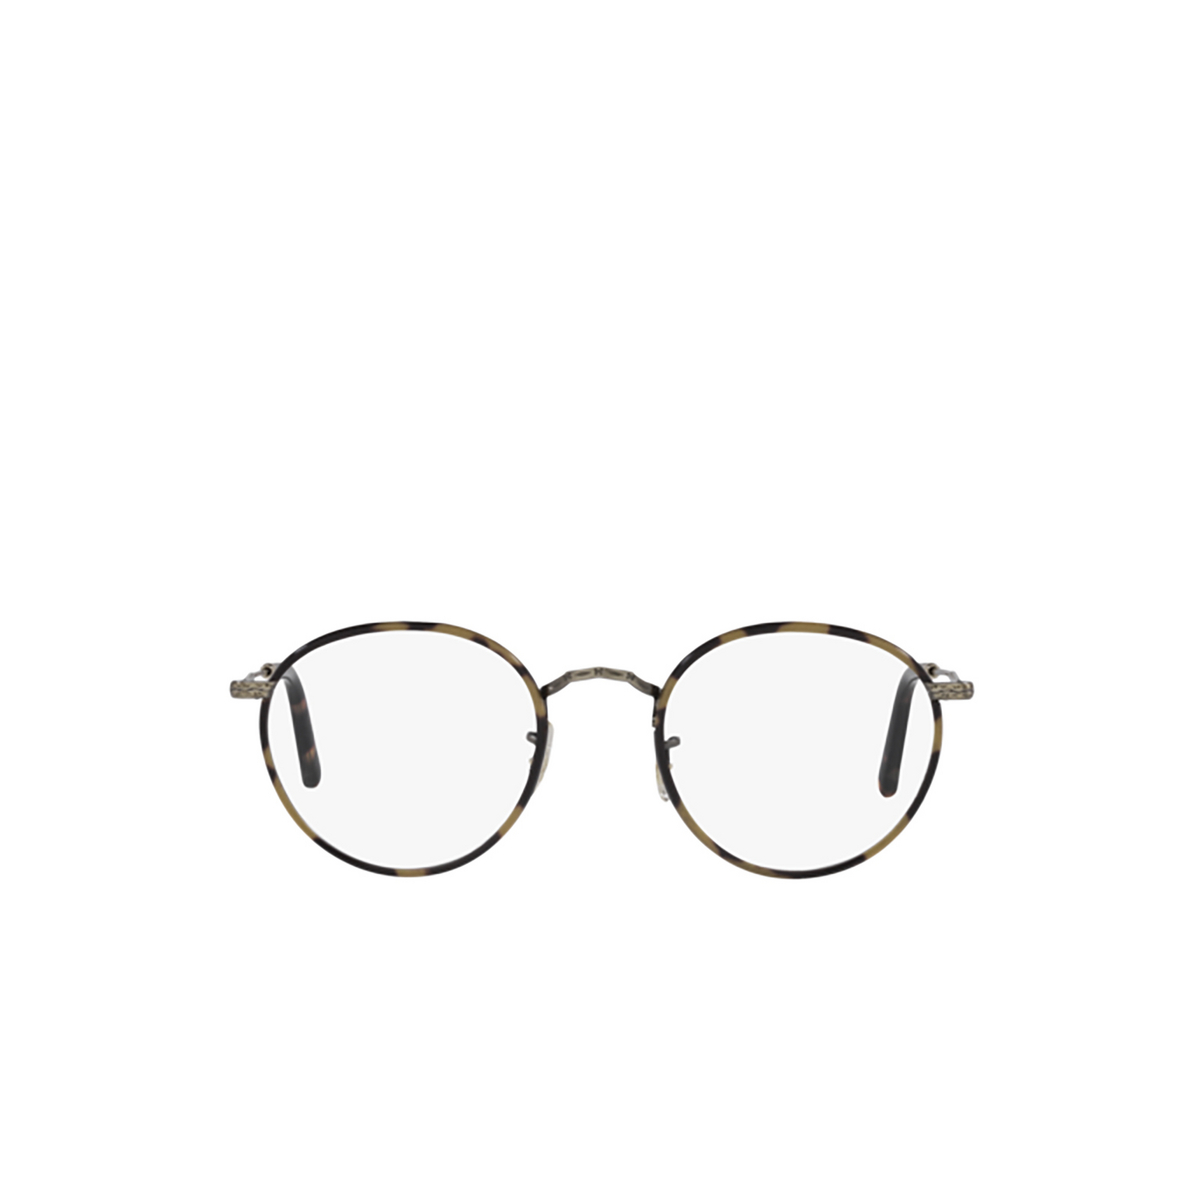 Oliver Peoples CARLING Eyeglasses 5284 Antique Gold / Dtb - front view